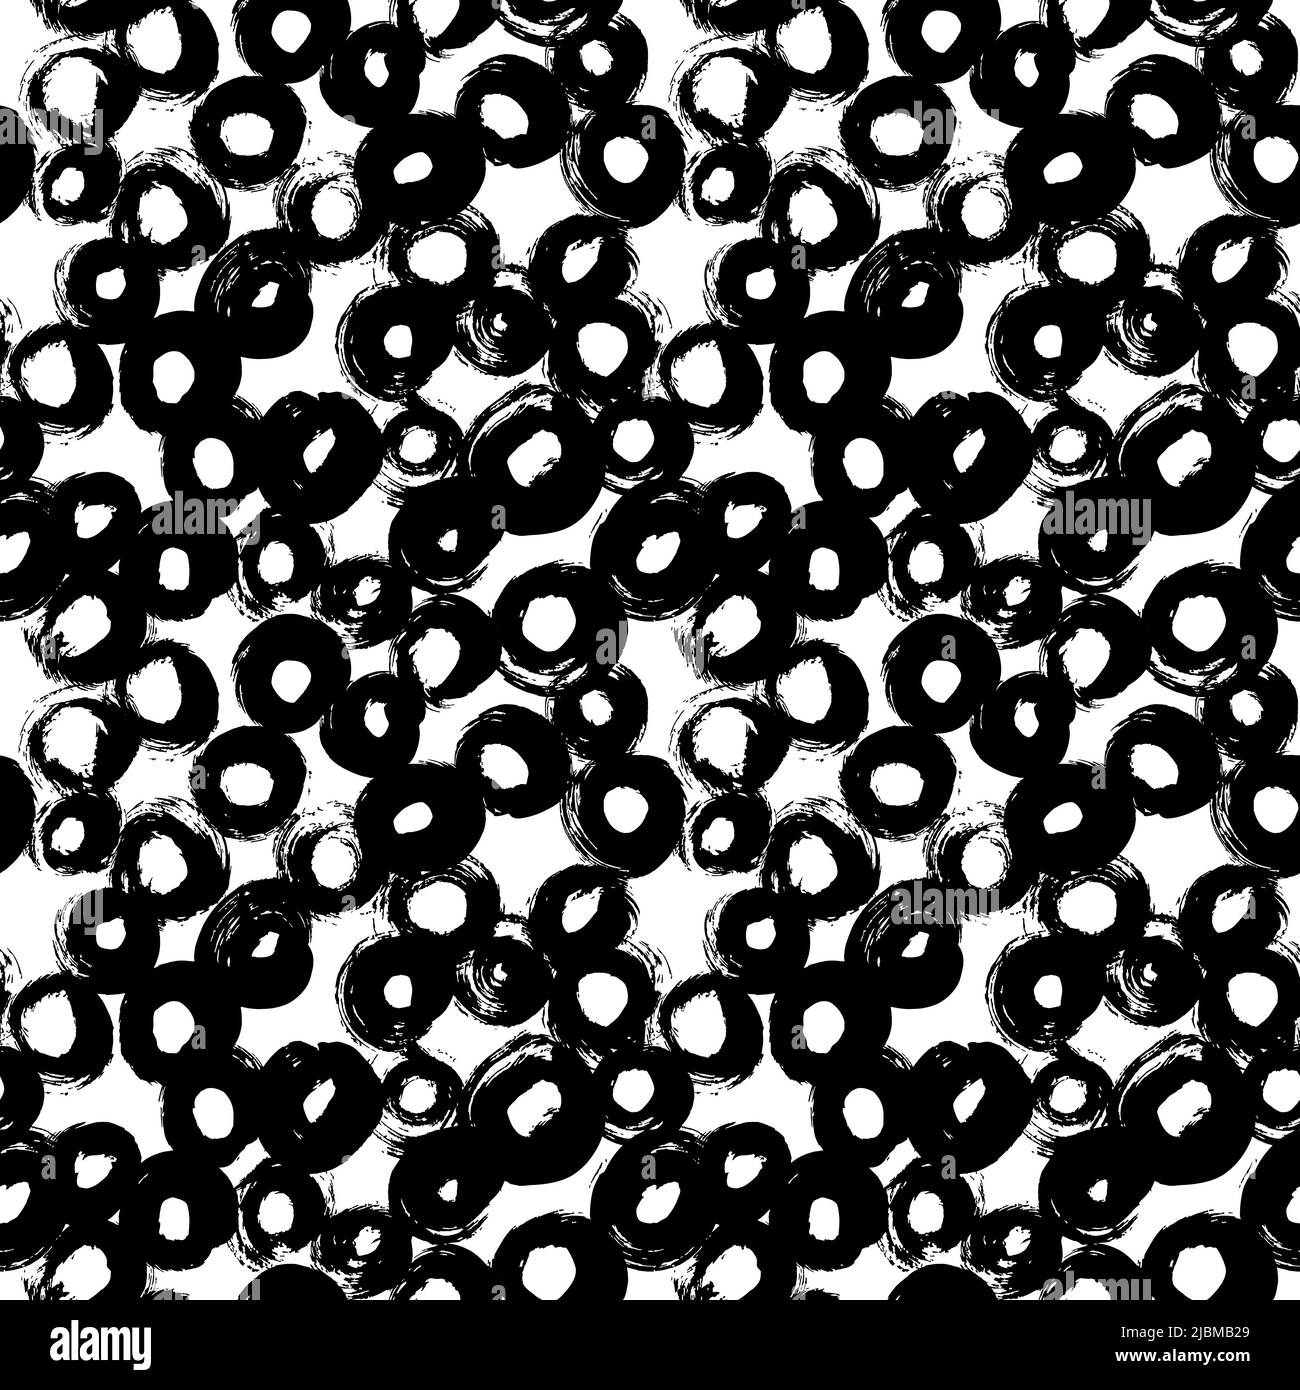 Hand drawn grunge black circles seamless pattern. Stock Vector